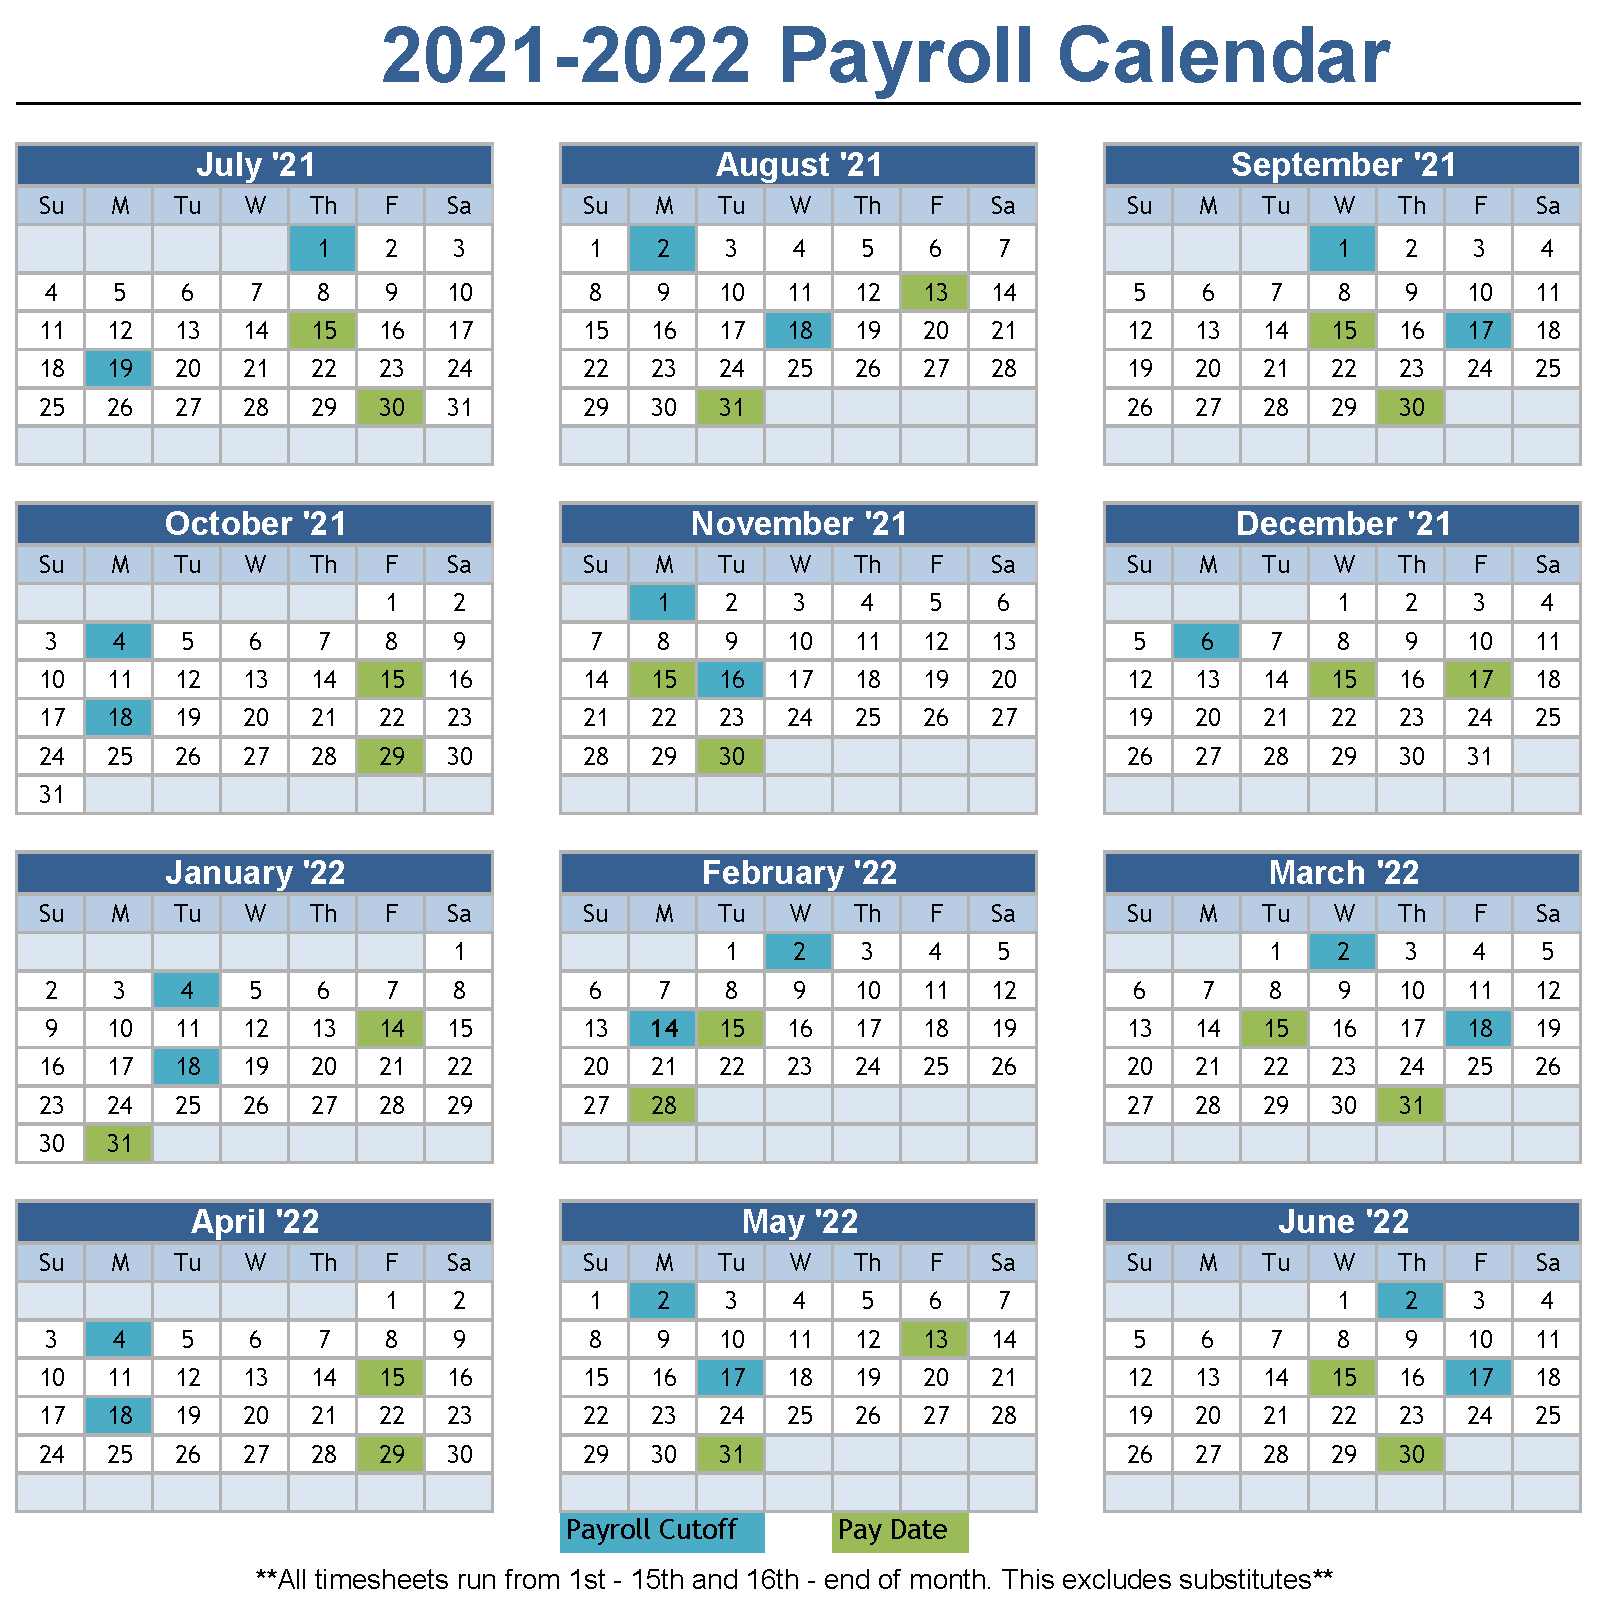 Charles Schwab Payroll Calendar 2022